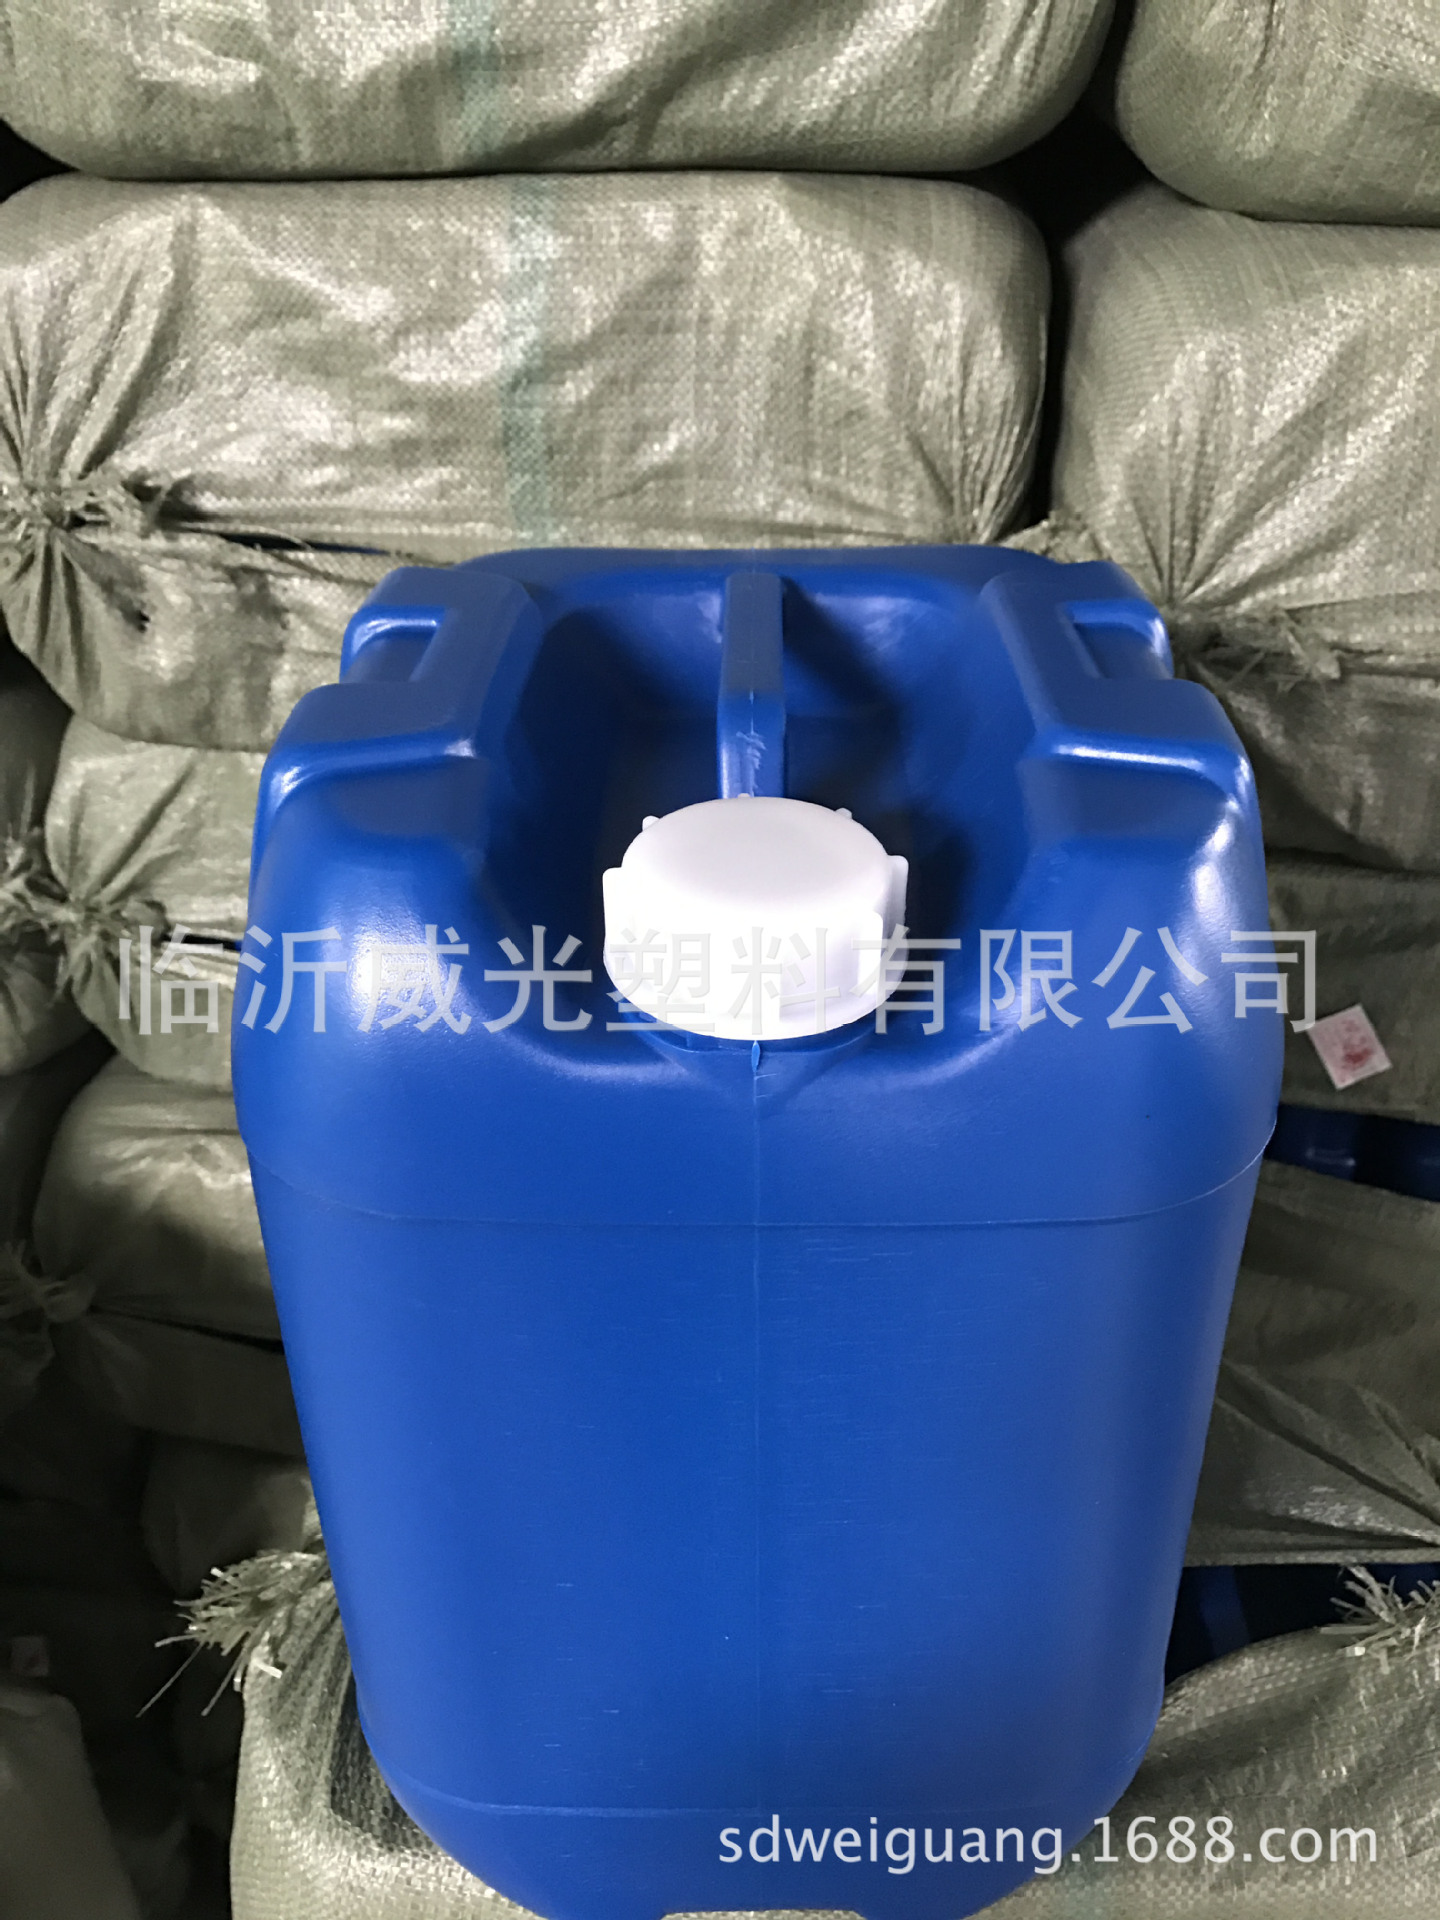 25L 蓝色化工液体桶 抗摔高韧性塑料桶 防滑塌设计 化工专用桶示例图3